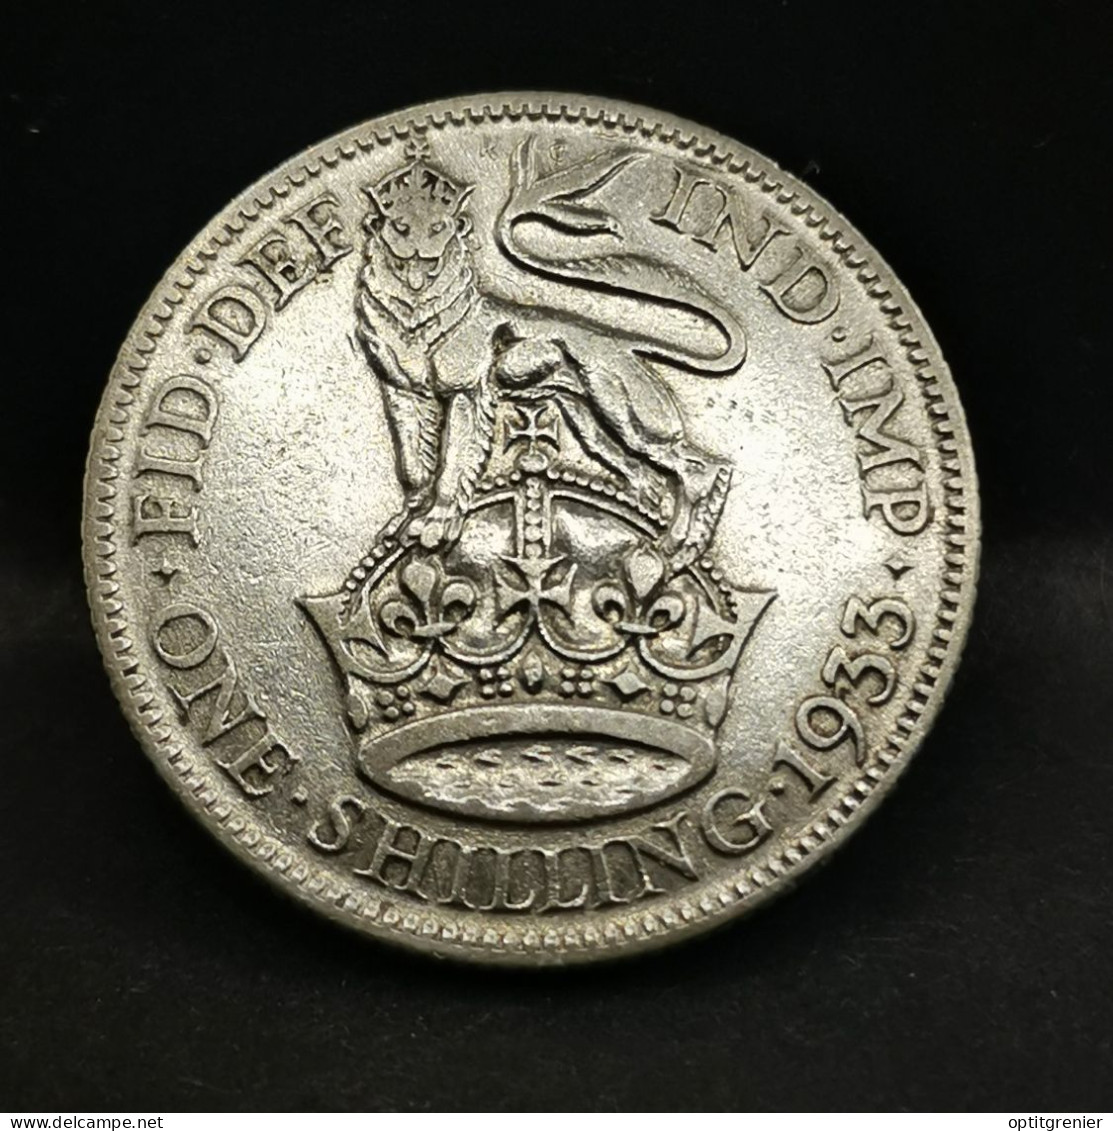 1 SHILLING ARGENT 1933 GEORGE V ROYAUME UNI / UNITED KINGDOM SILVER - I. 1 Shilling